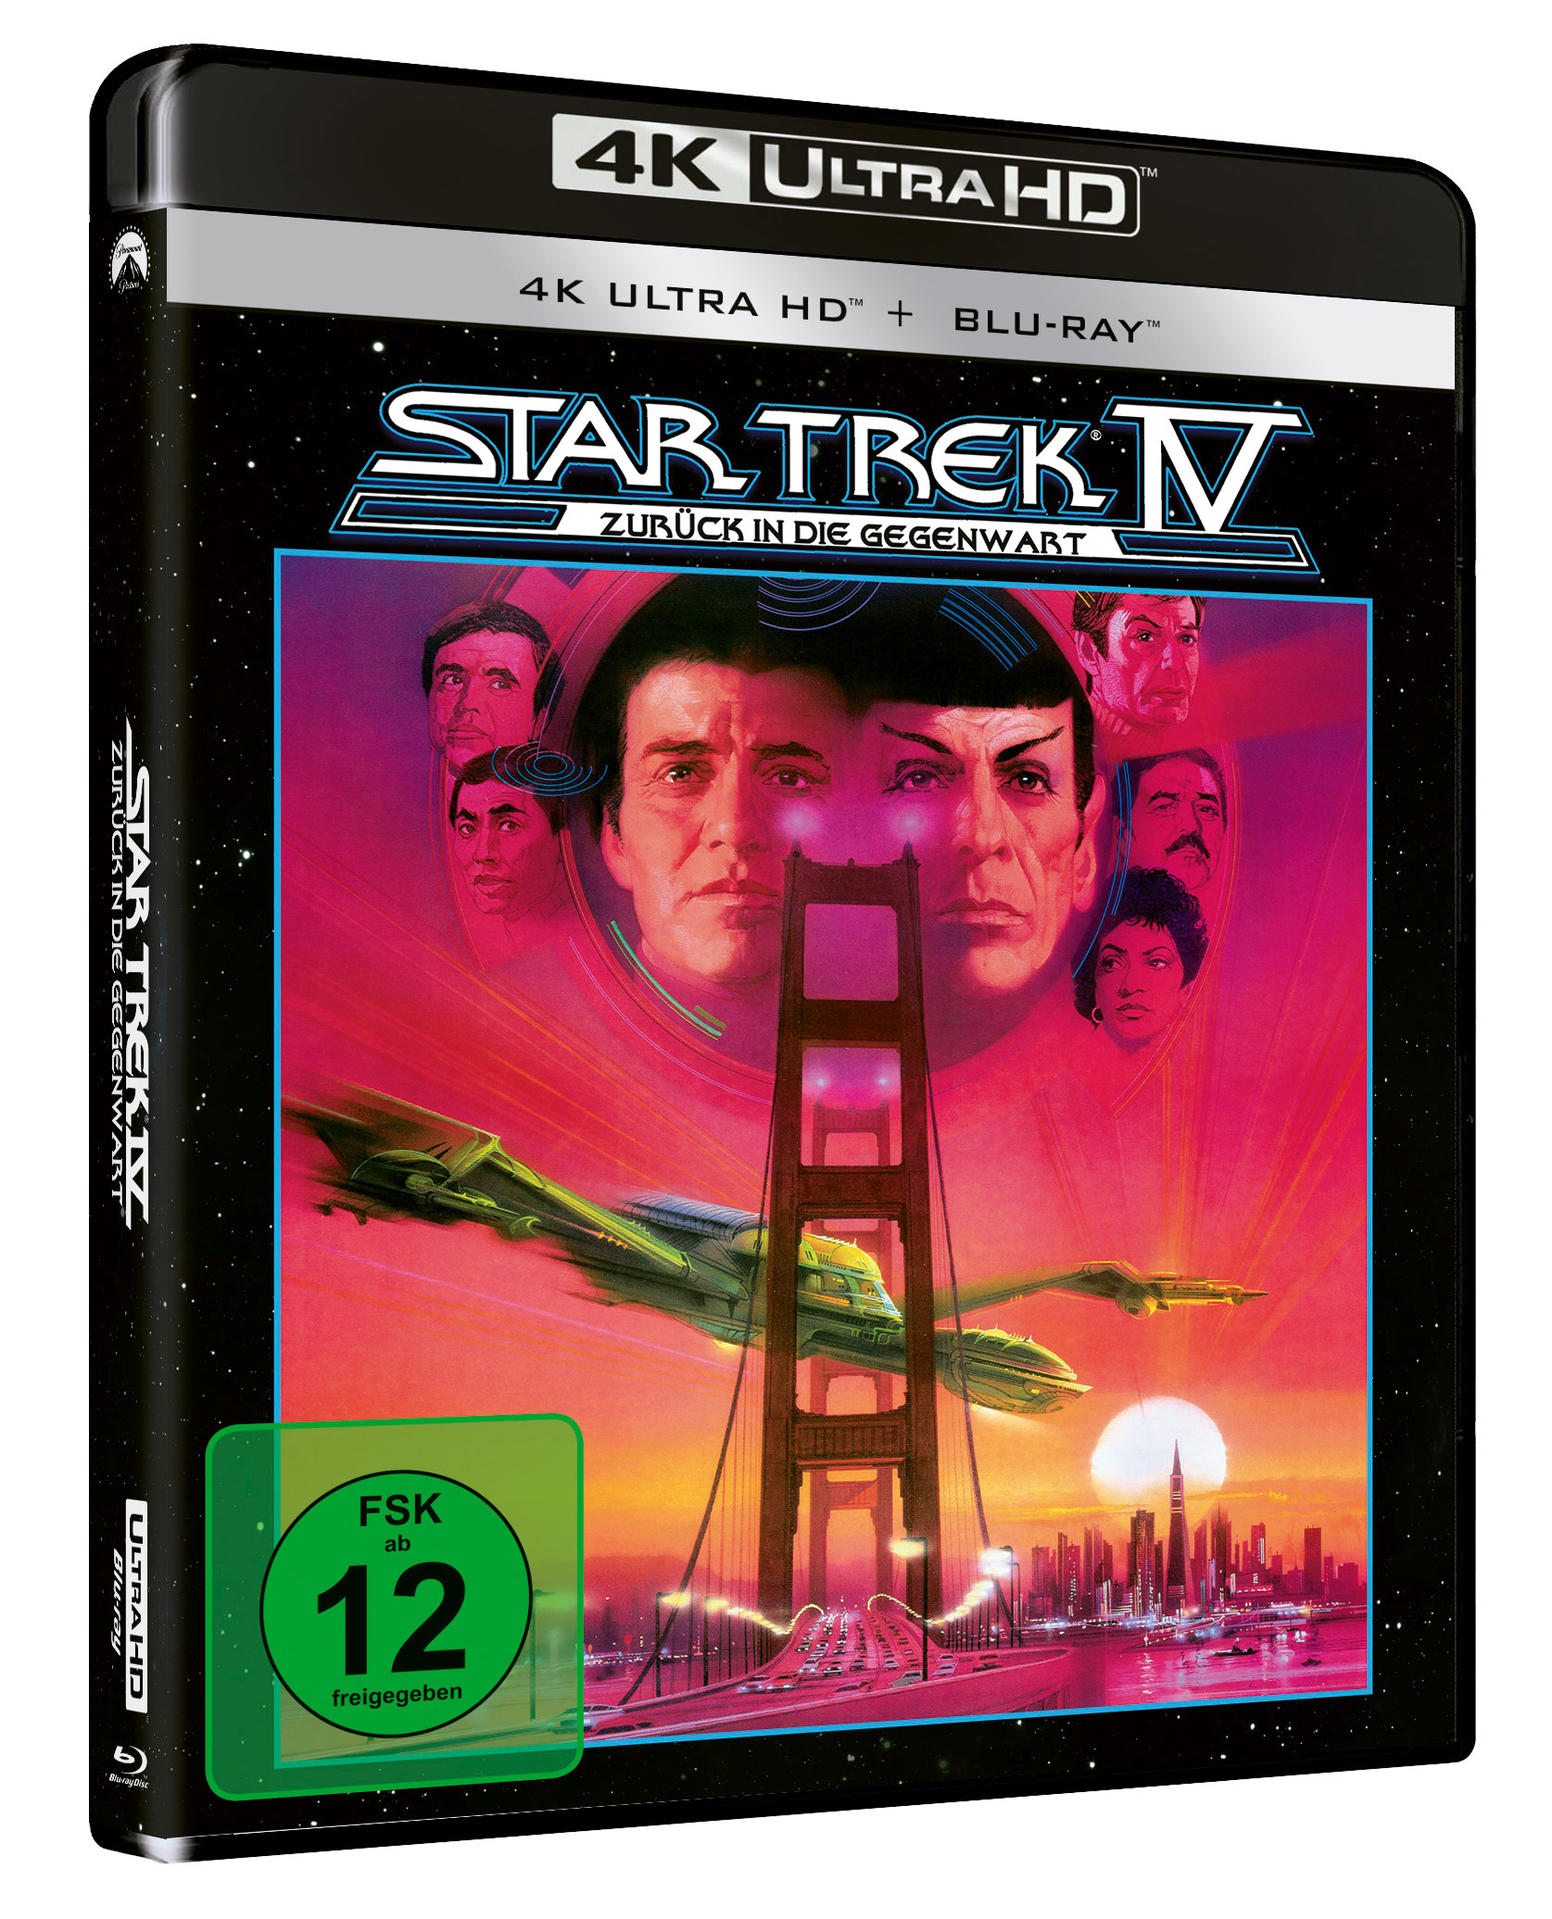 Star Trek IV Ultra HD 4K + Gegenwart in - Blu-ray Zurück die Blu-ray